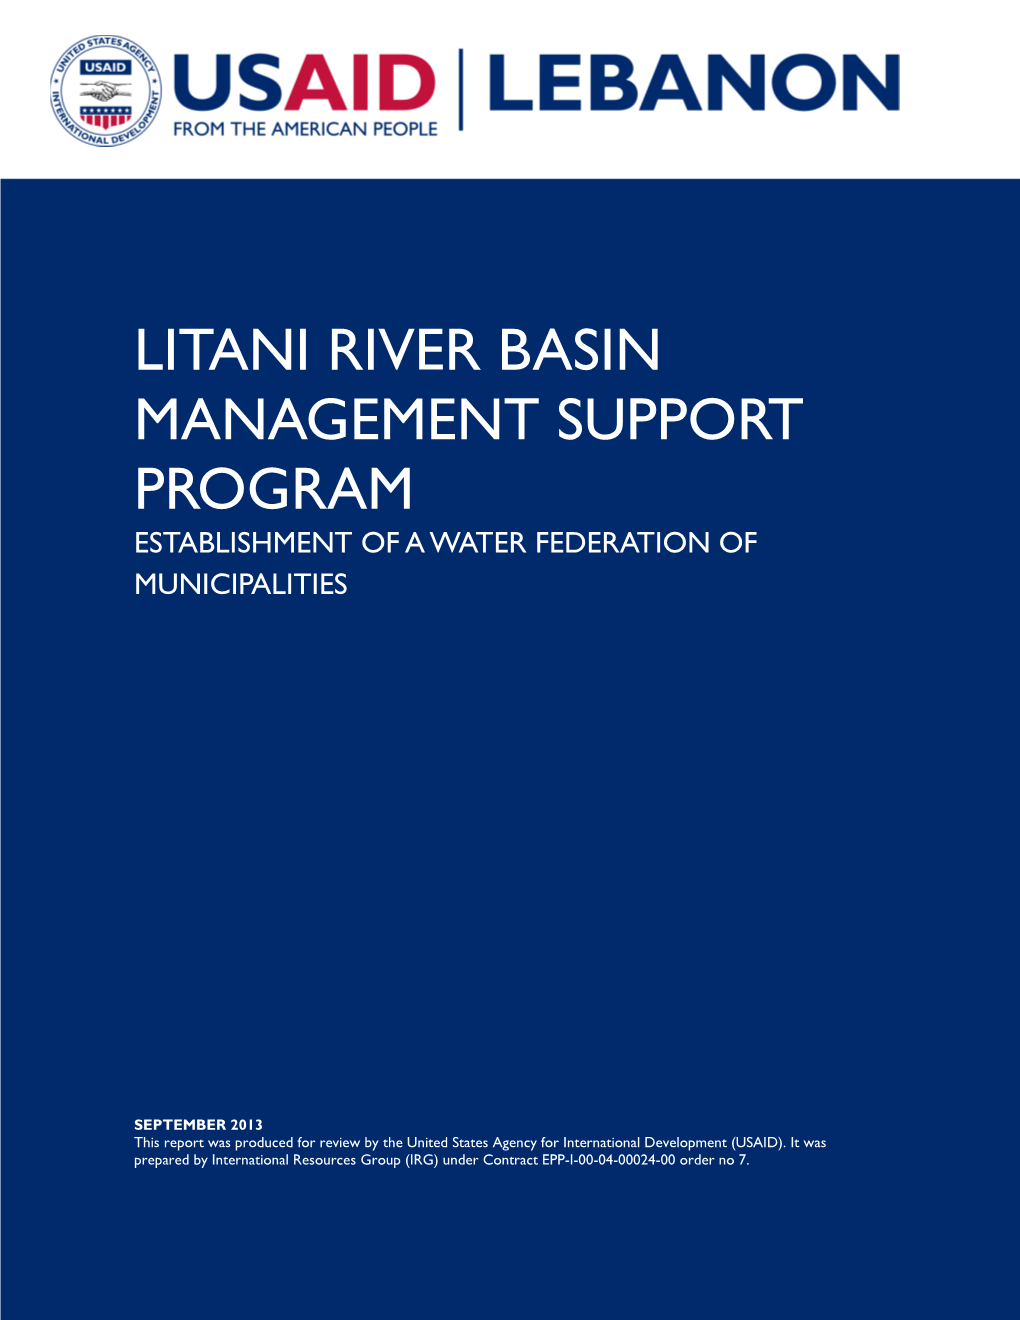 Litani River Basin Management Support Program Establishment of a Water Federation of Municipalities